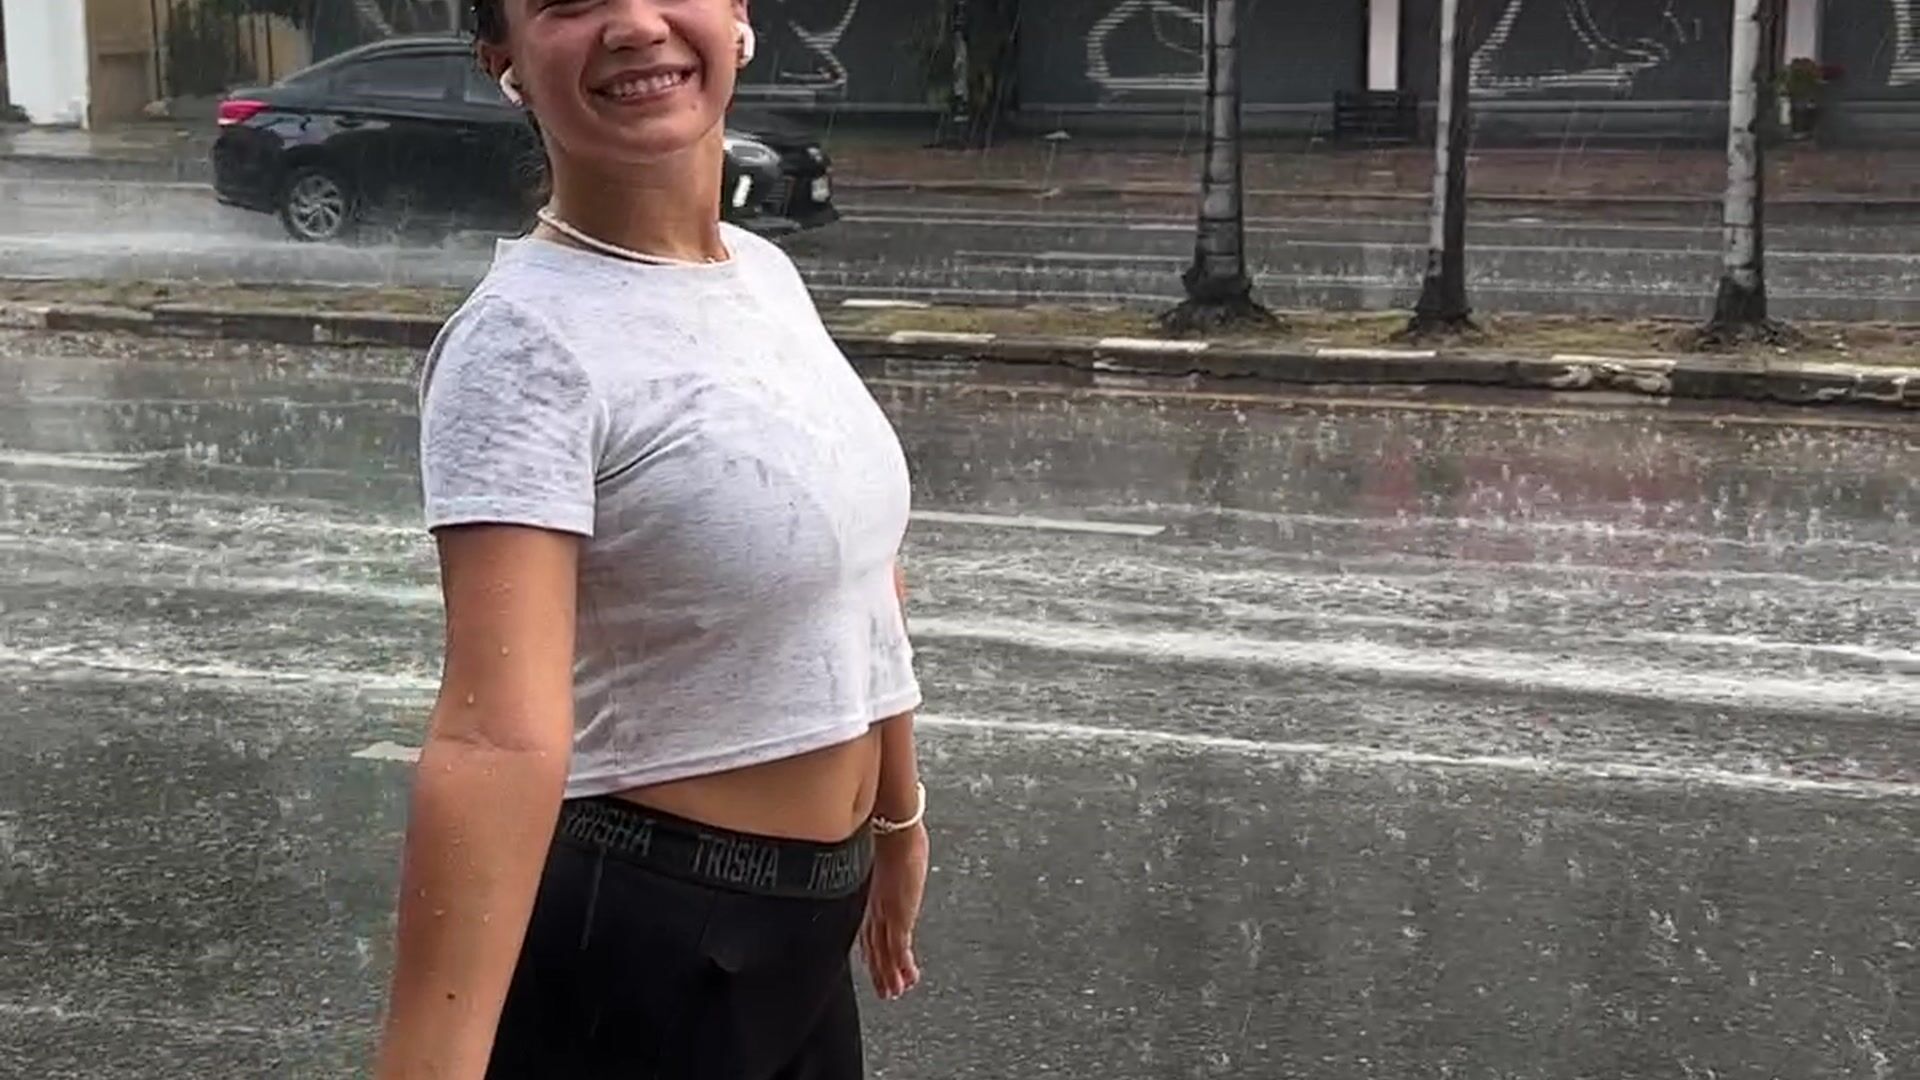 Under the rain after running